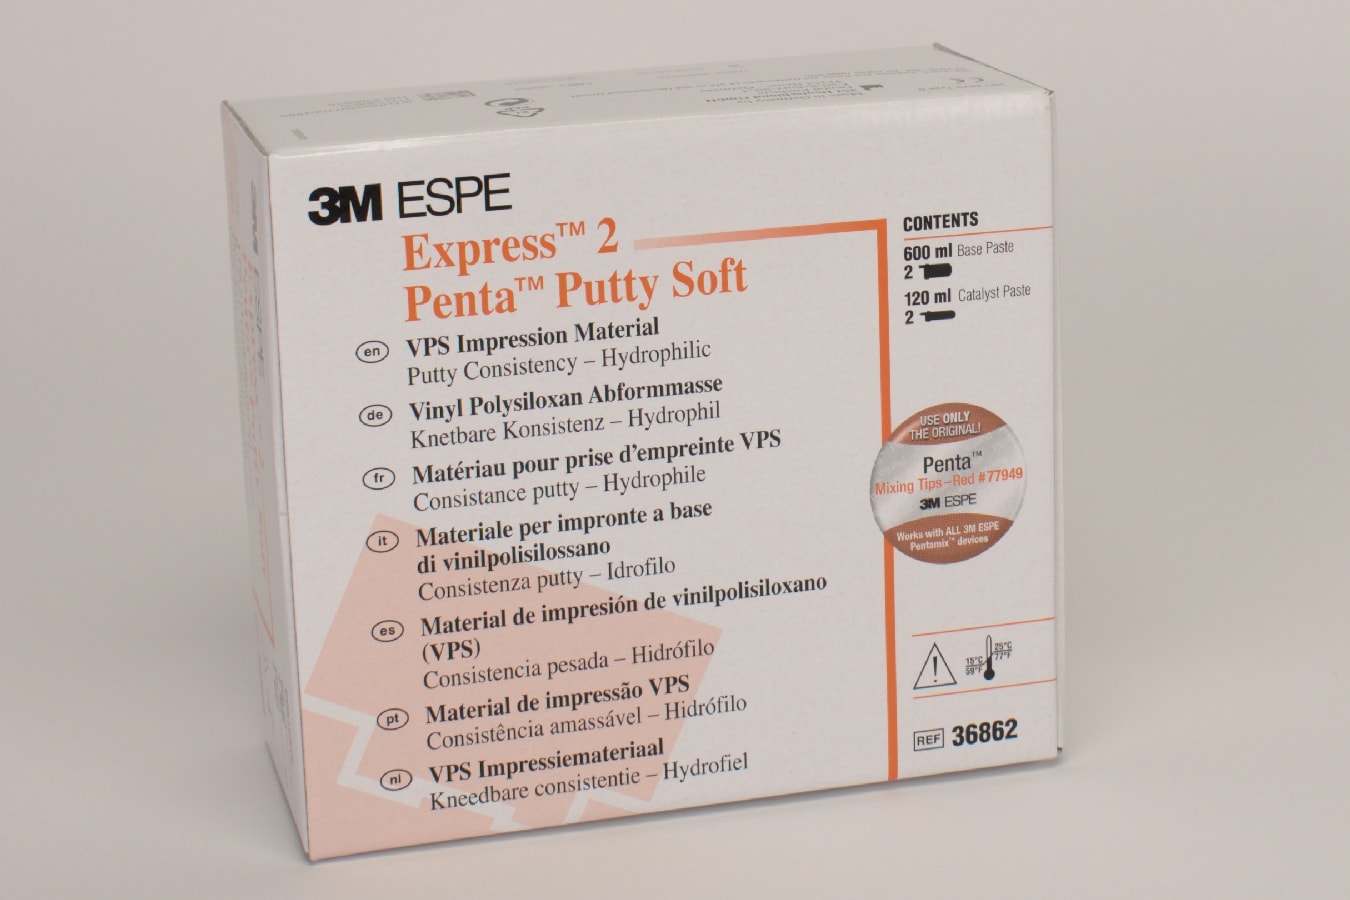 Express 2 Penta Putty Soft 2x360ml